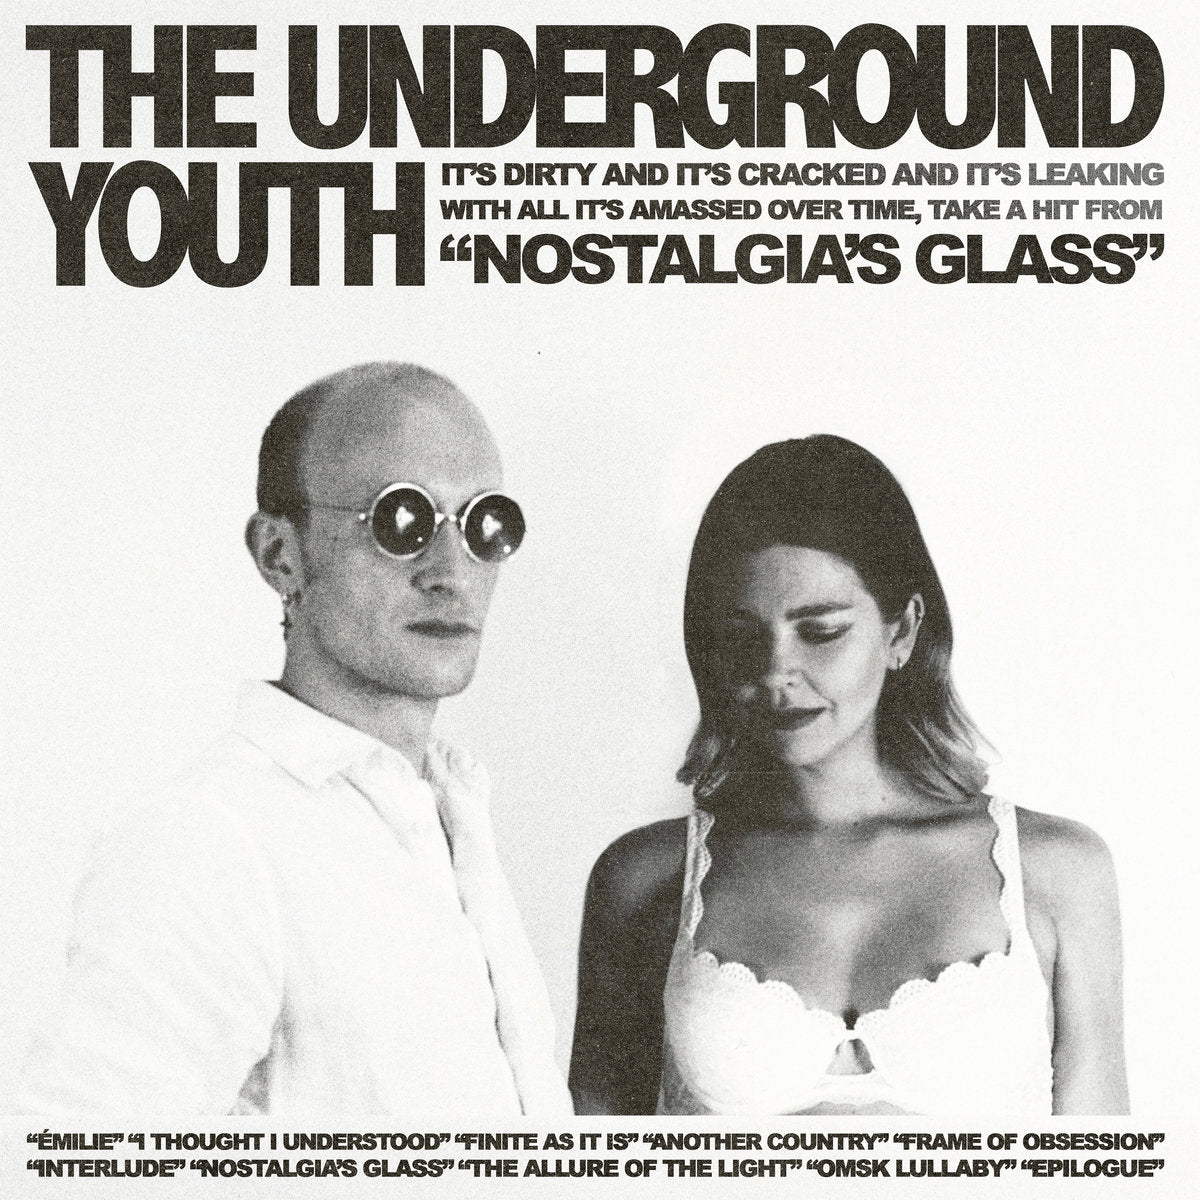 THE UNDERGROUND YOUTH - Nostalgia's Glass - LP - 180g Clear Blue Vinyl [AUG 18]